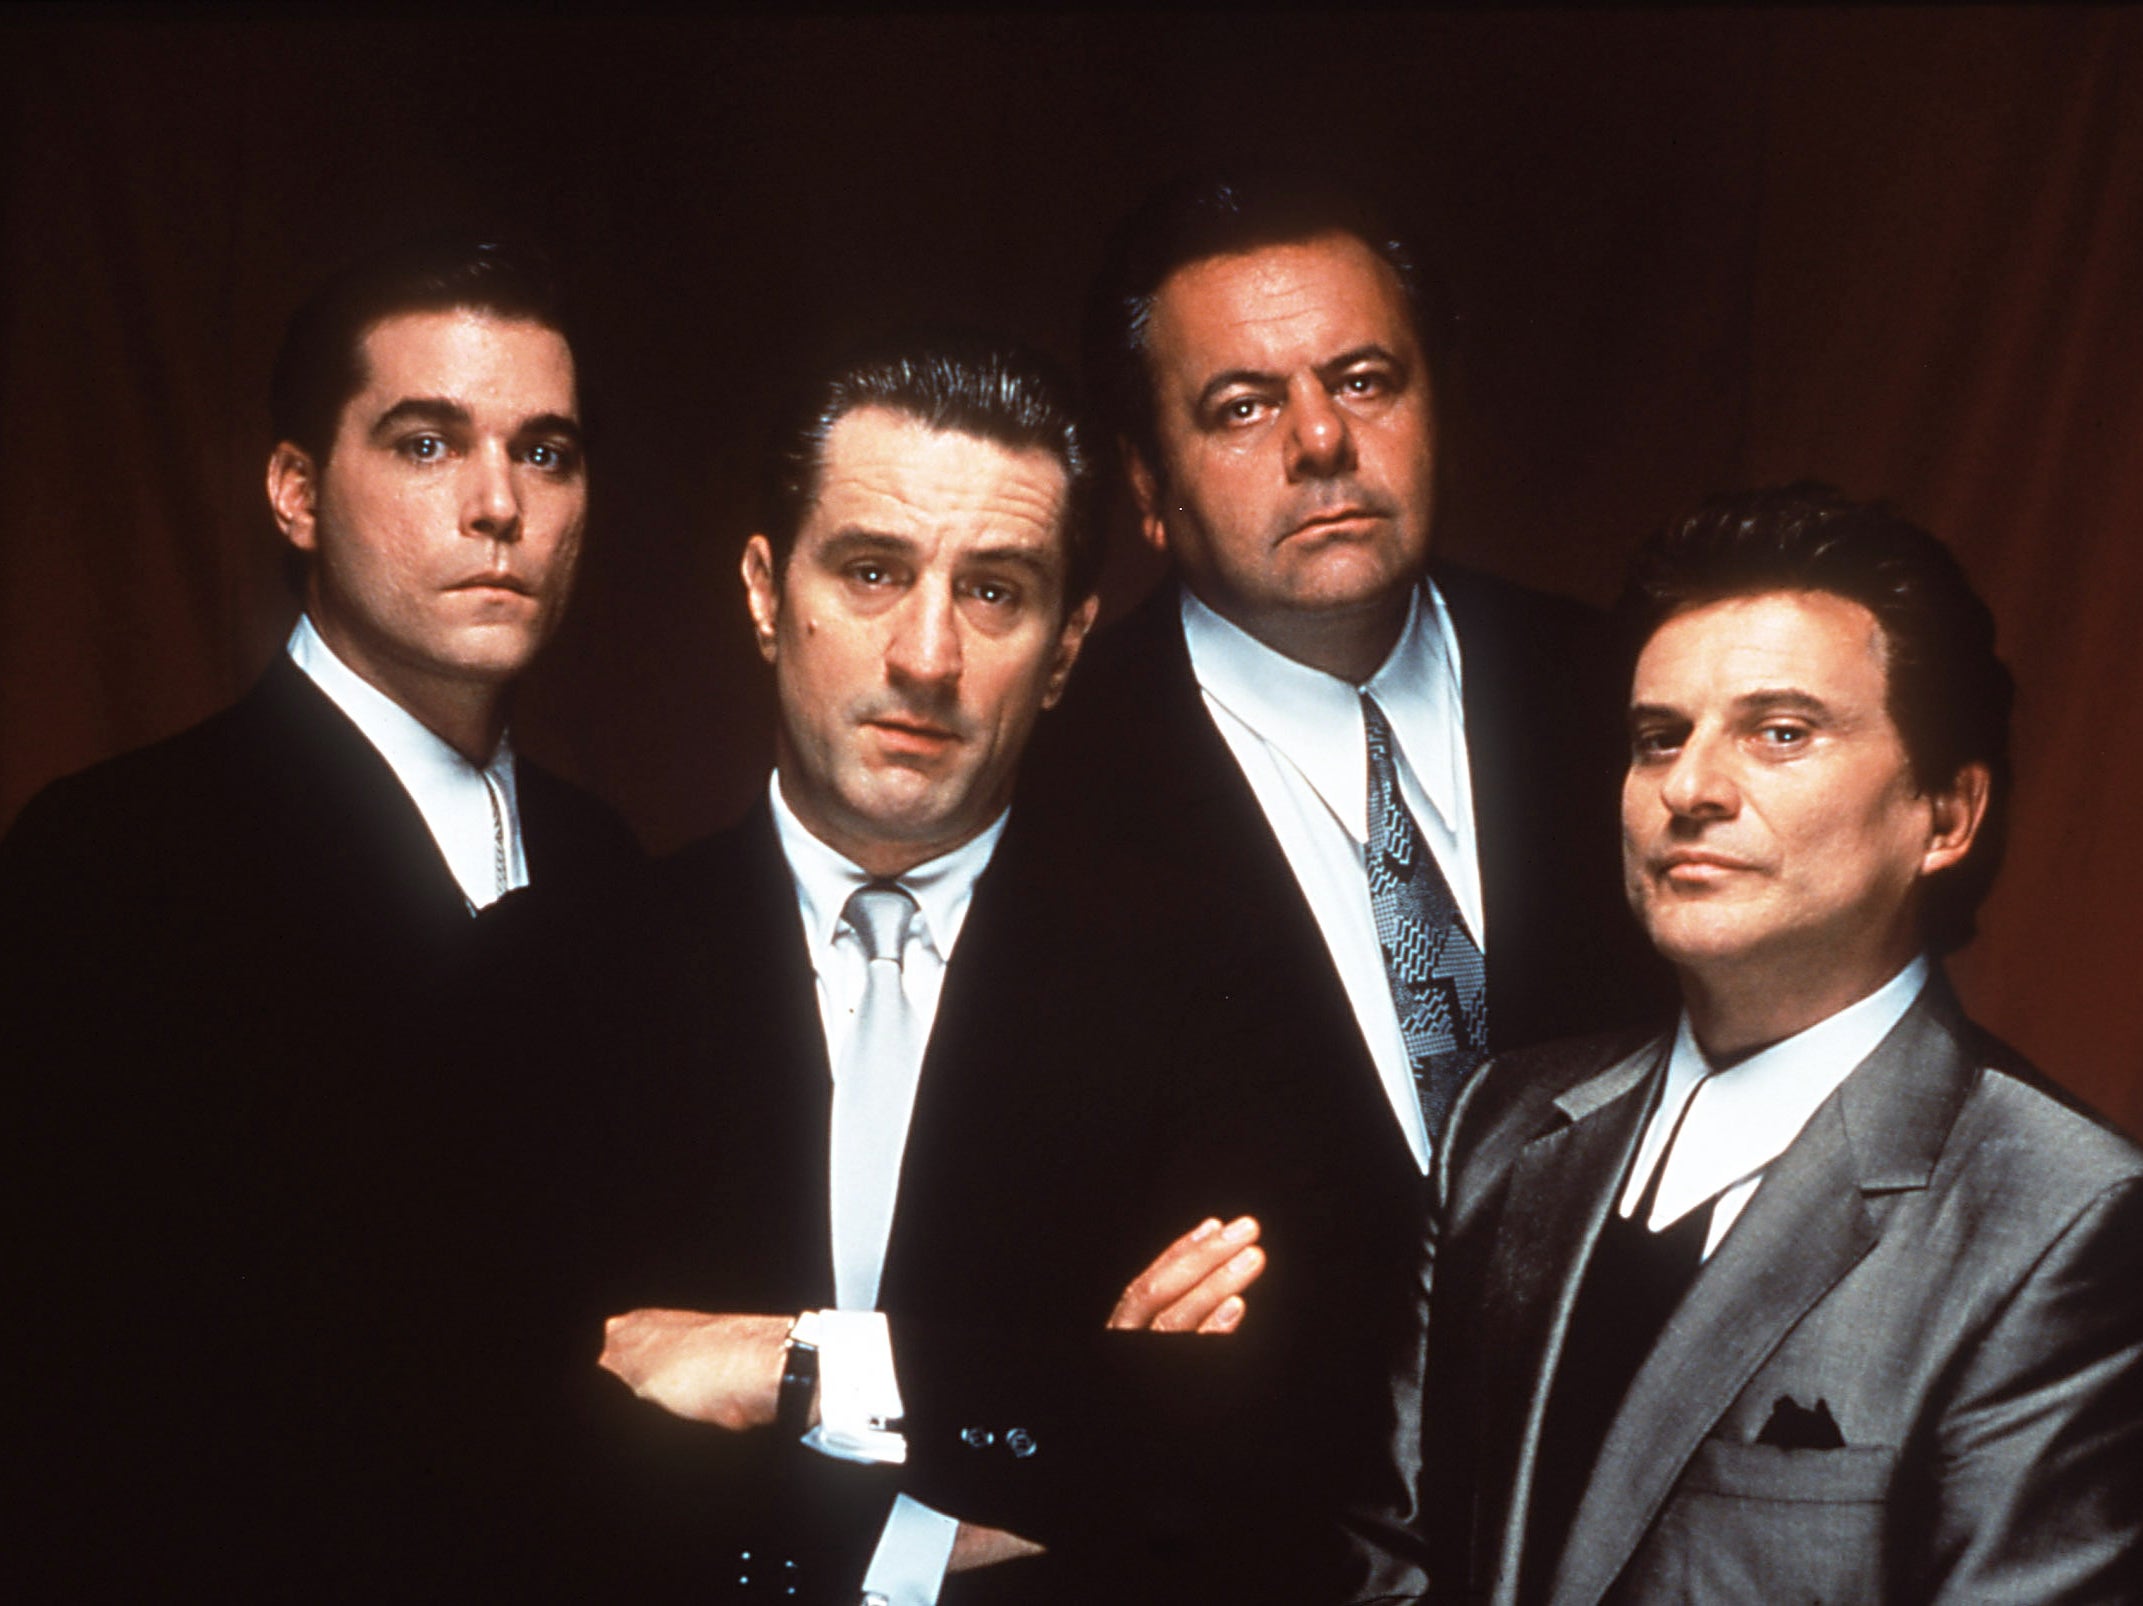 From left to right: Ray Liotta, Robert De Niro, Paul Sorvino and Joe Pesci in ‘Goodfellas’